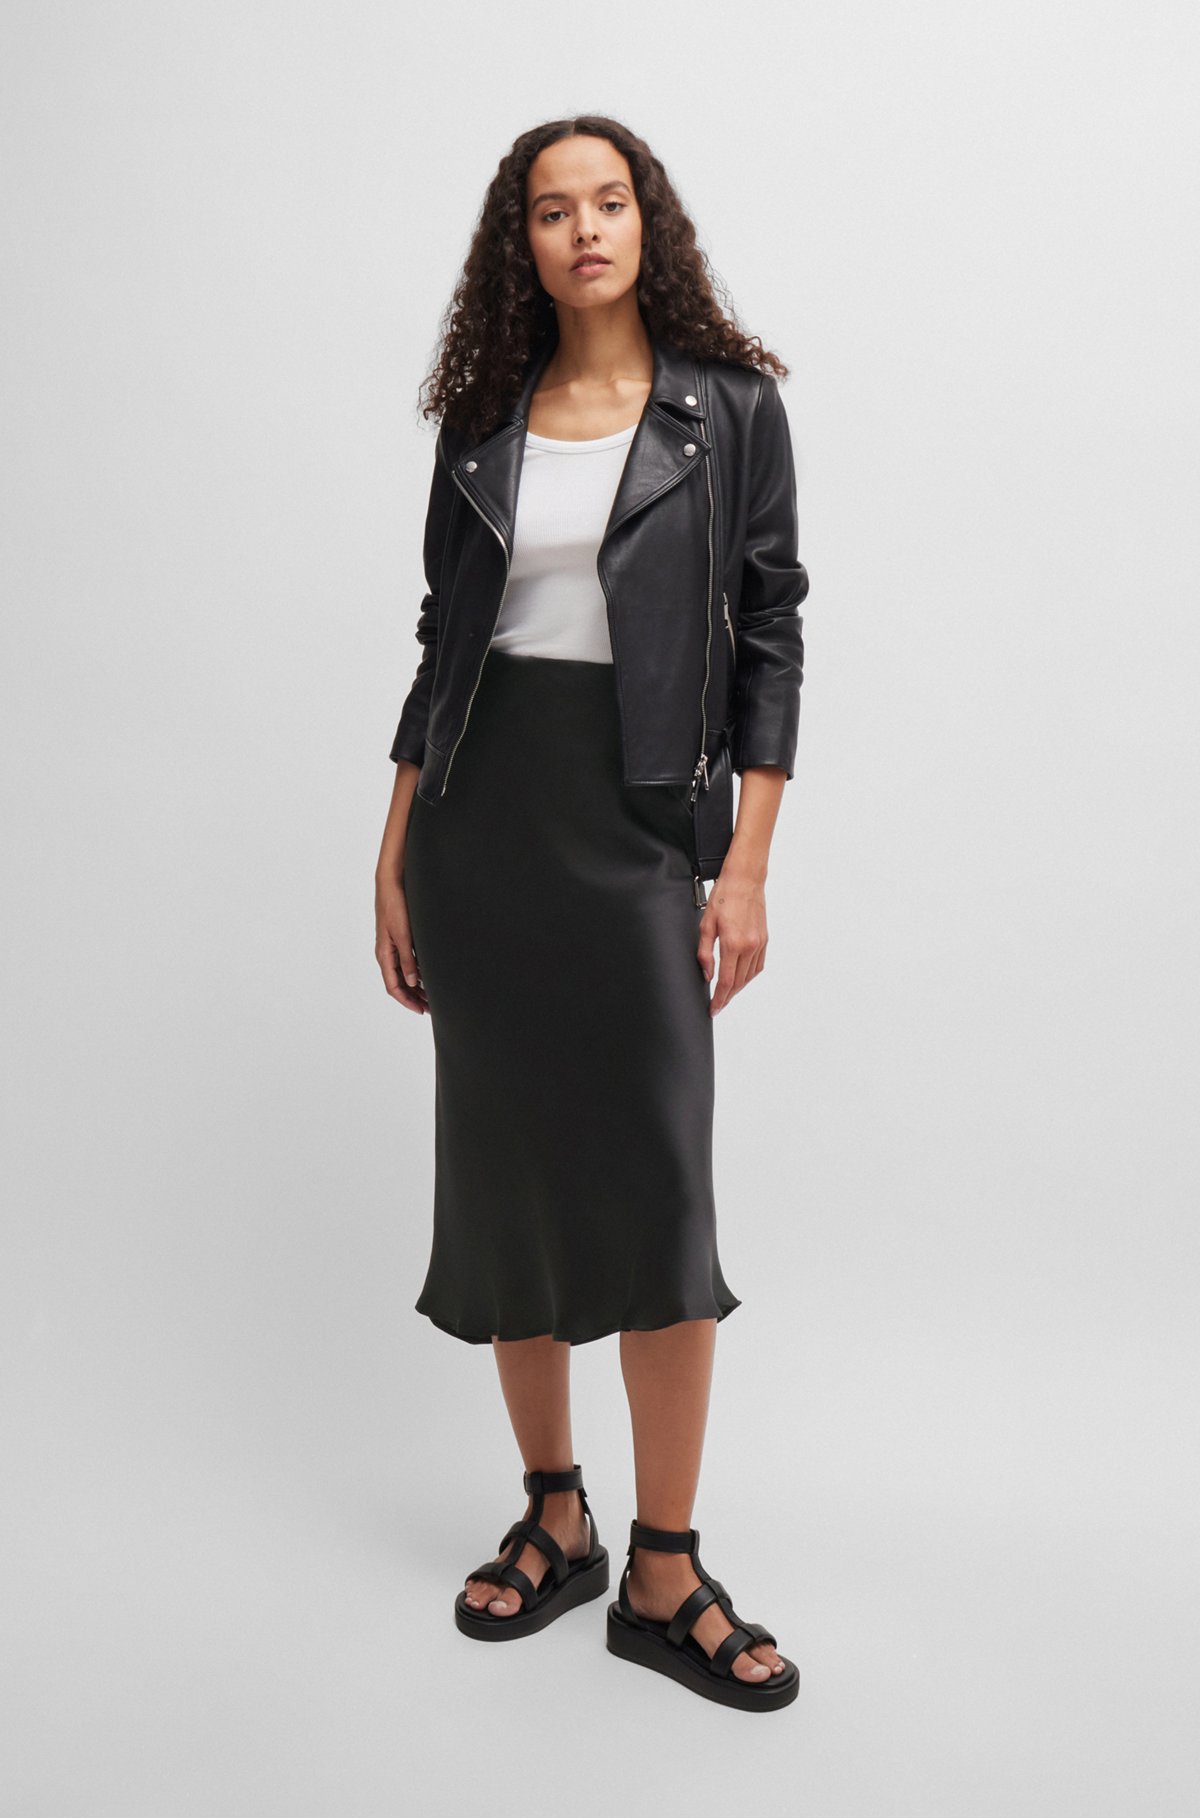 Satin midi skirt with logo detail, Black